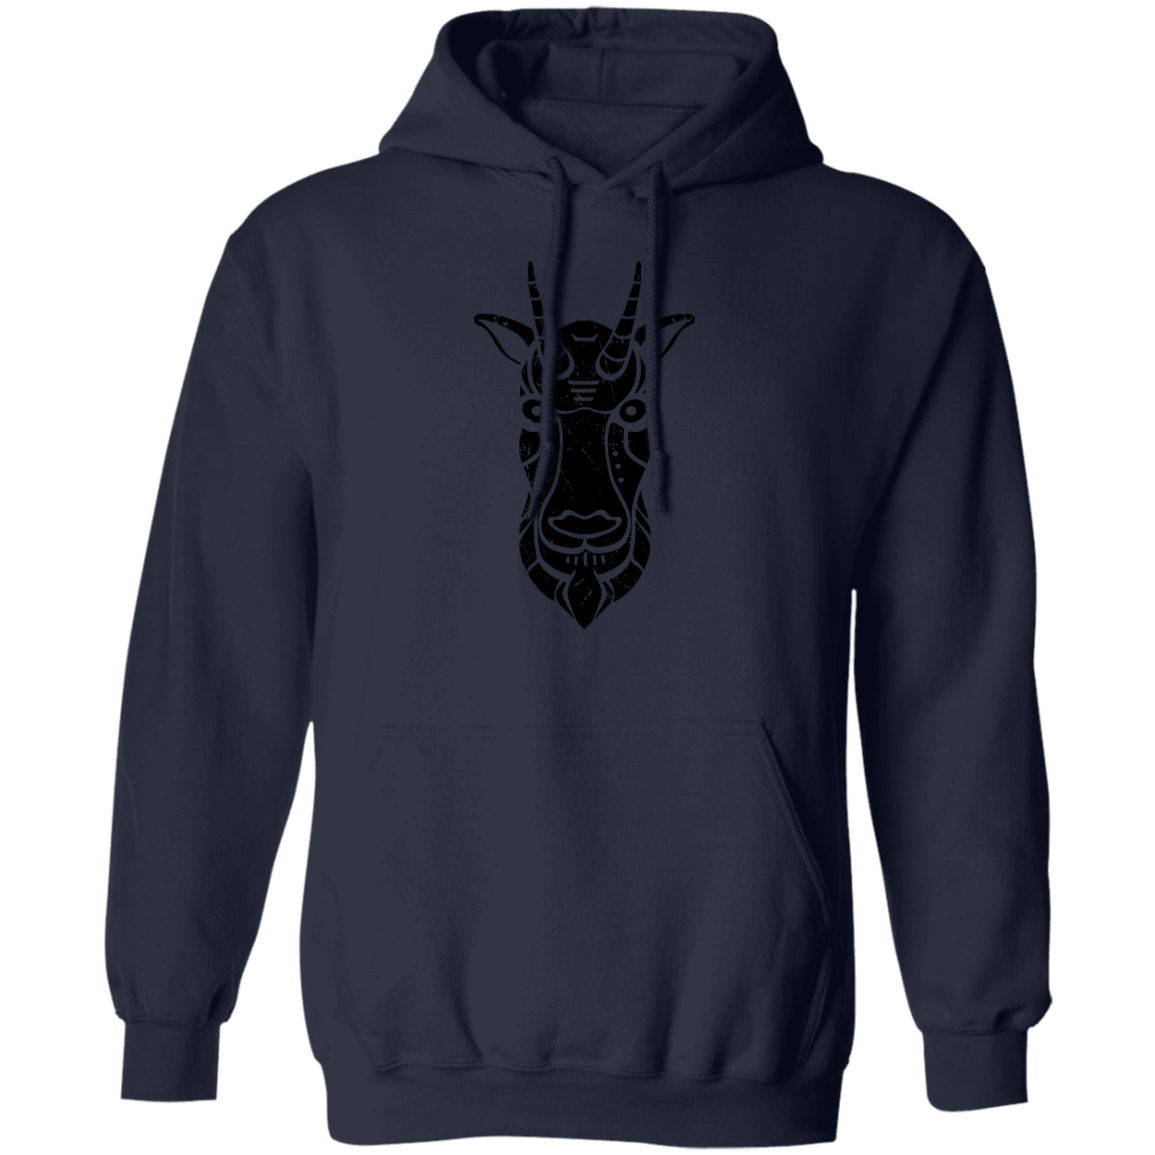 Black Distressed Emblem Hoodies for Adults (Mountain Goat/Rainier)